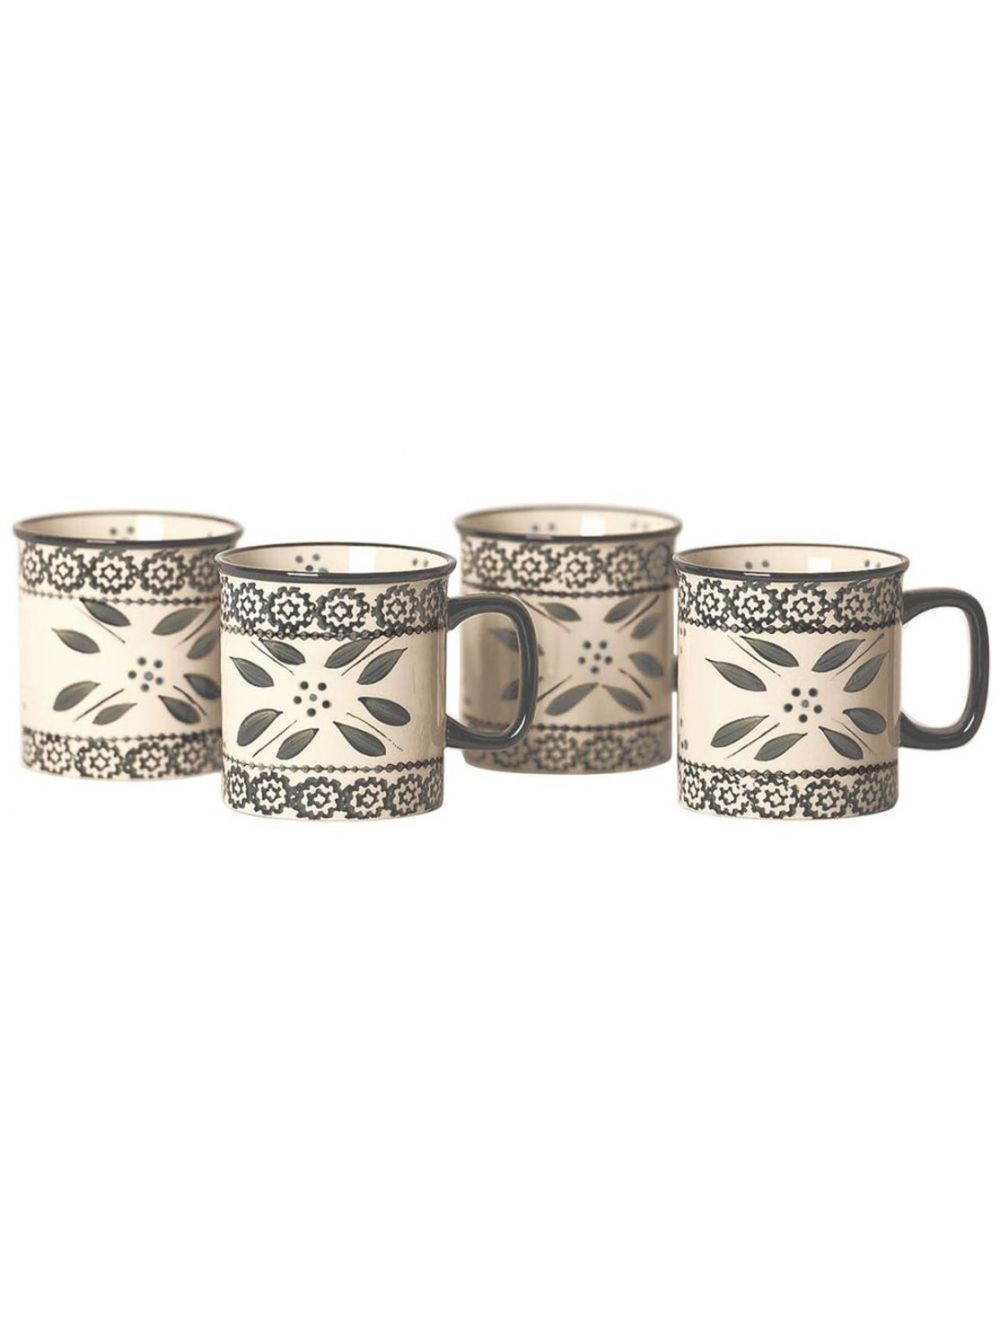 Temp-tations Old World Mug Set of 4-T49068-grey